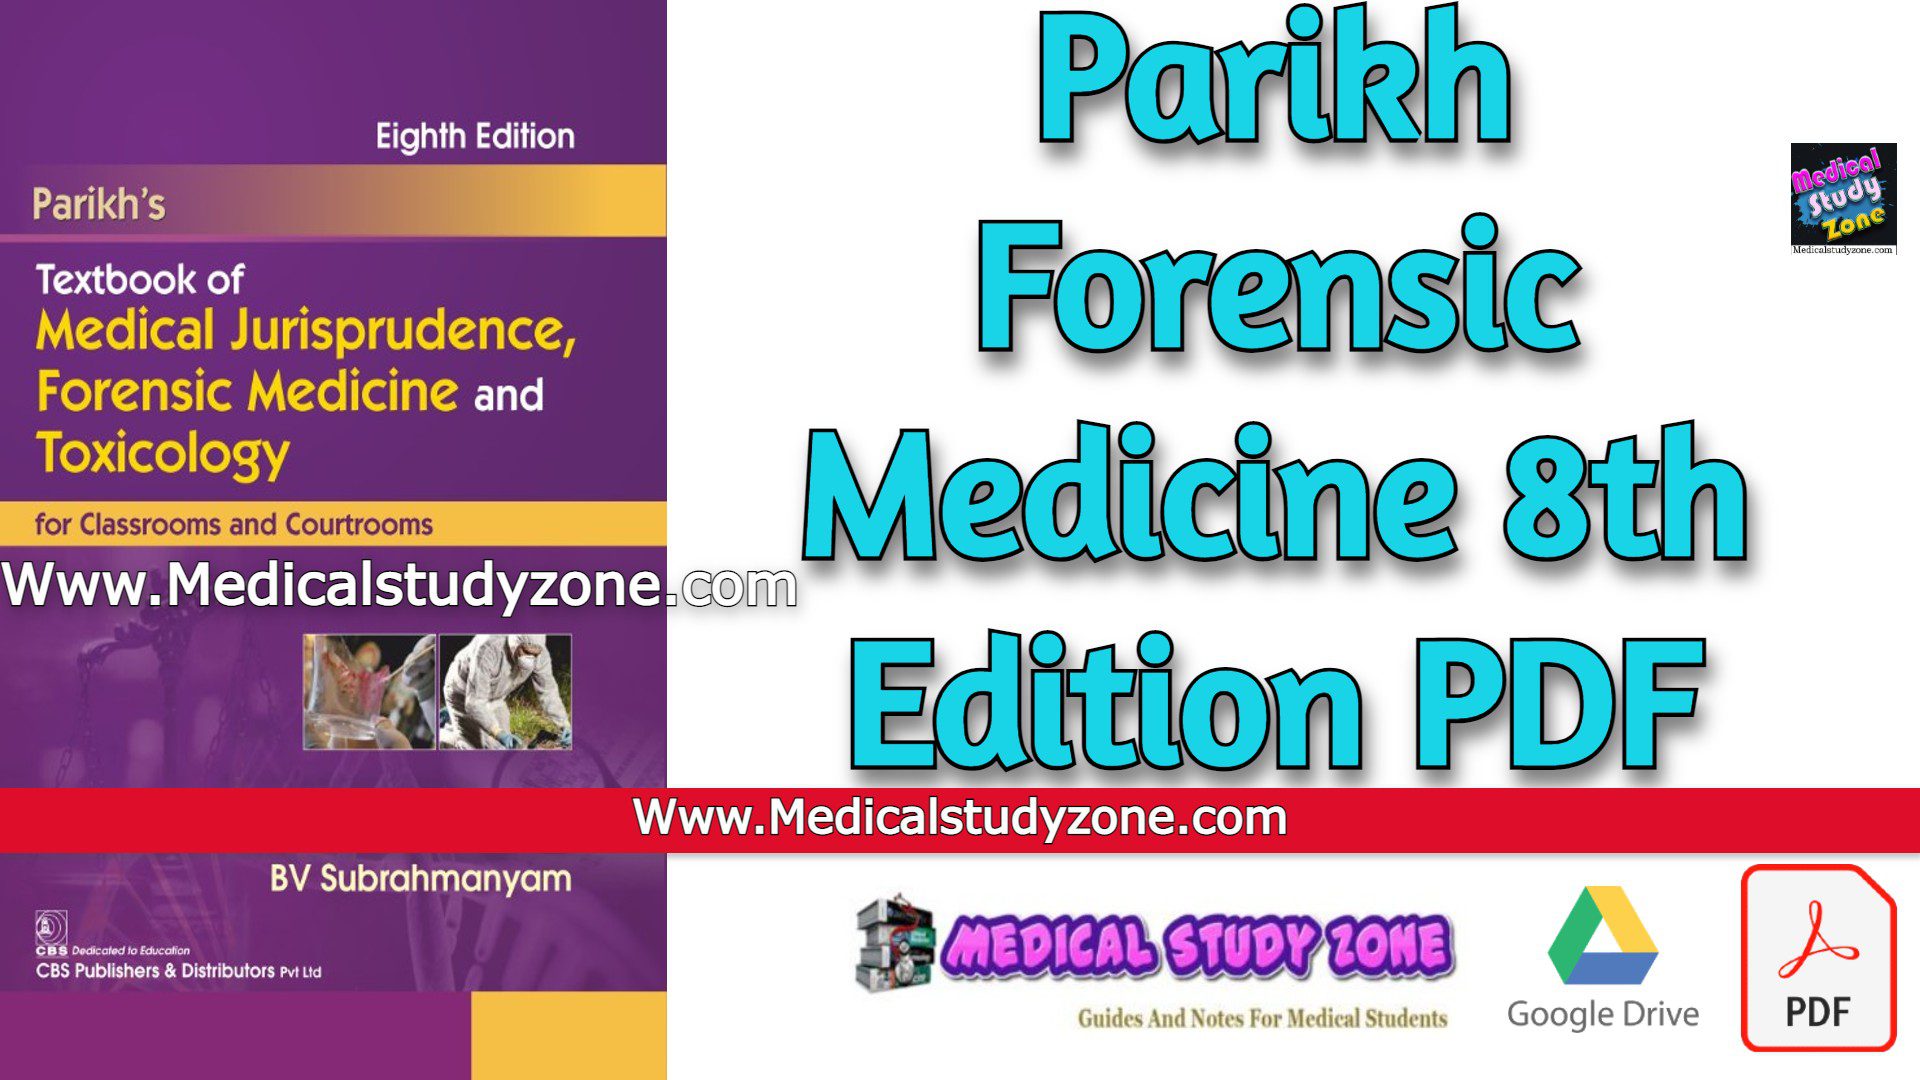 Parikh Forensic Medicine 8th Edition PDF Free Download